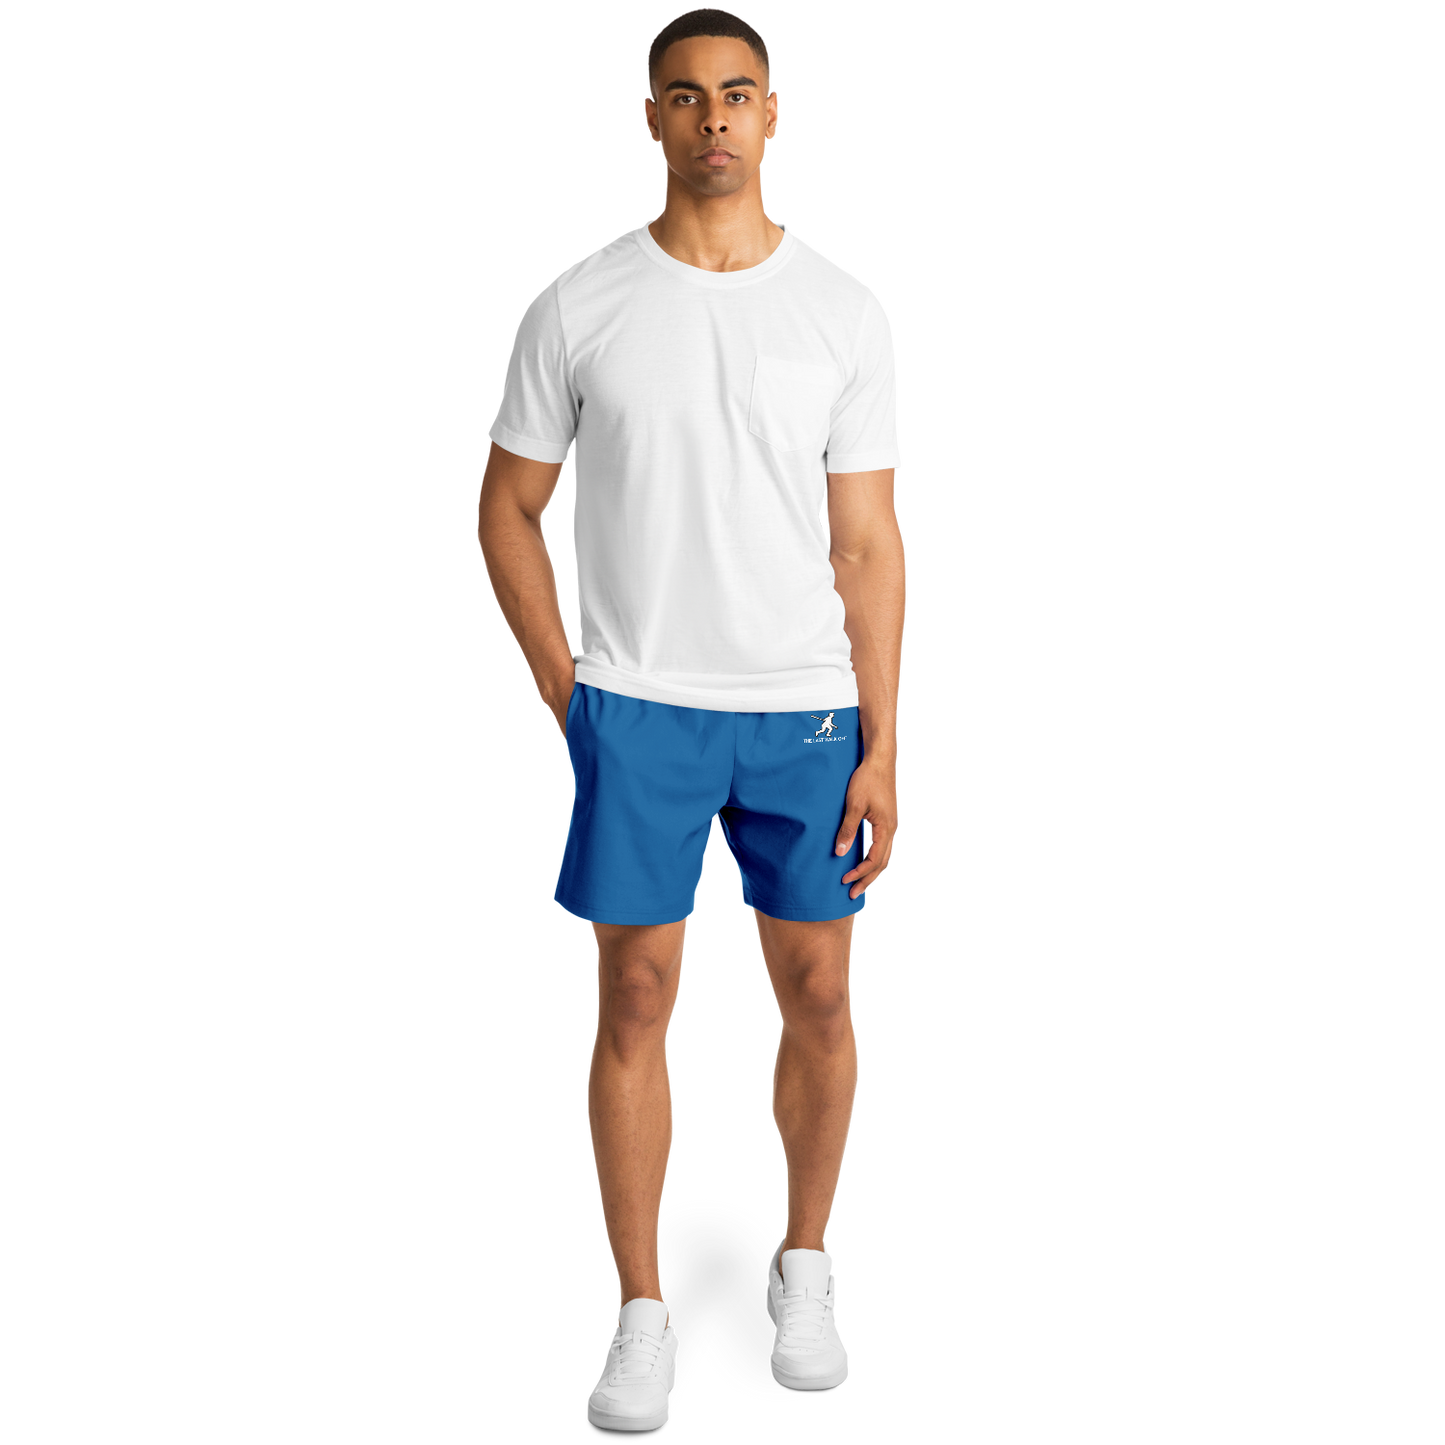 Los Angeles Men's Blue Shorts